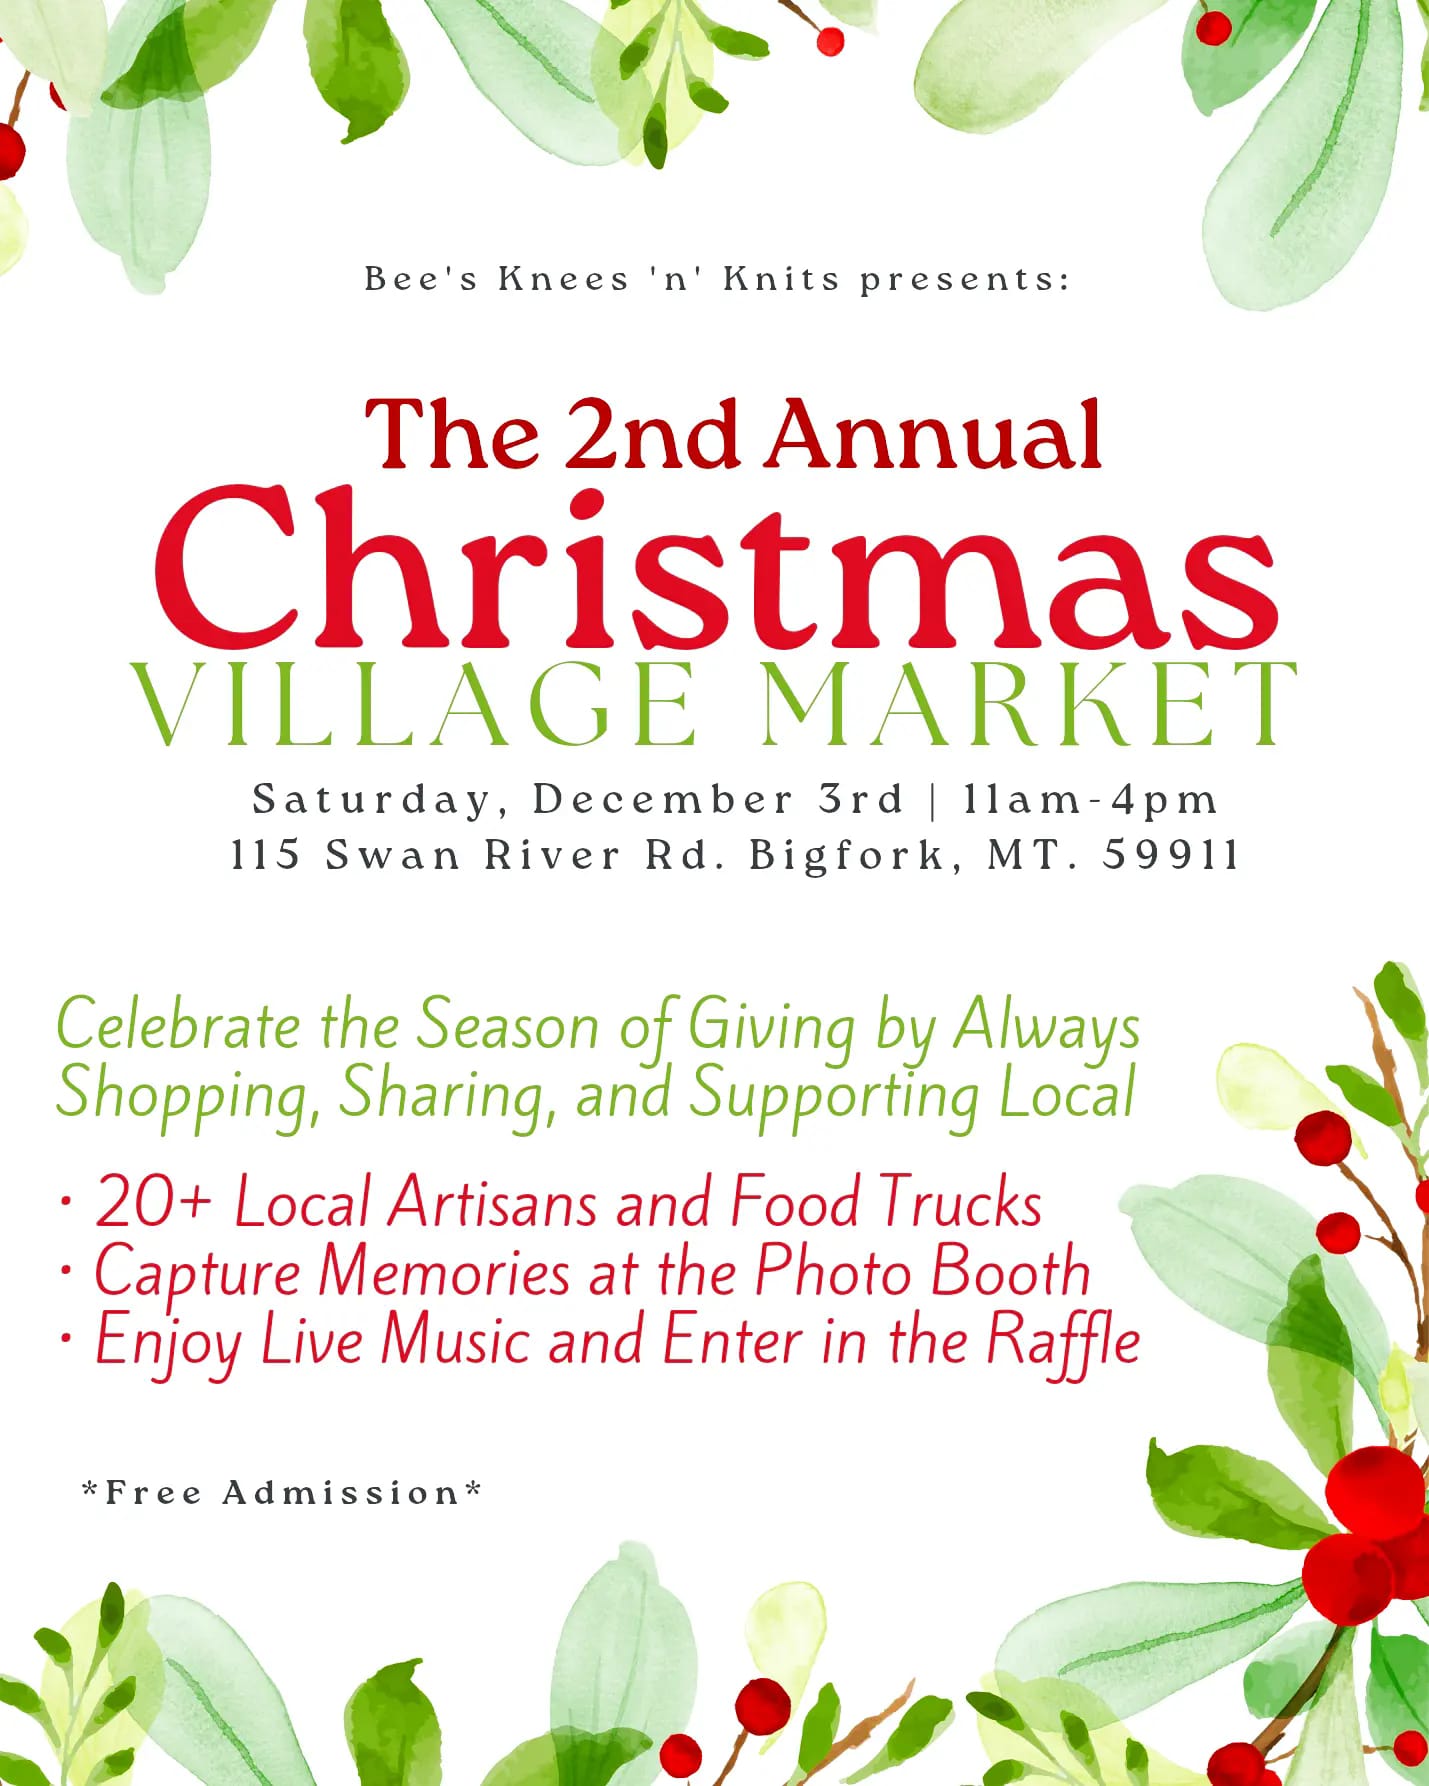 2nd Annual Christmas Village Market in Bigfork, Montana on Saturday, December 3, 2022